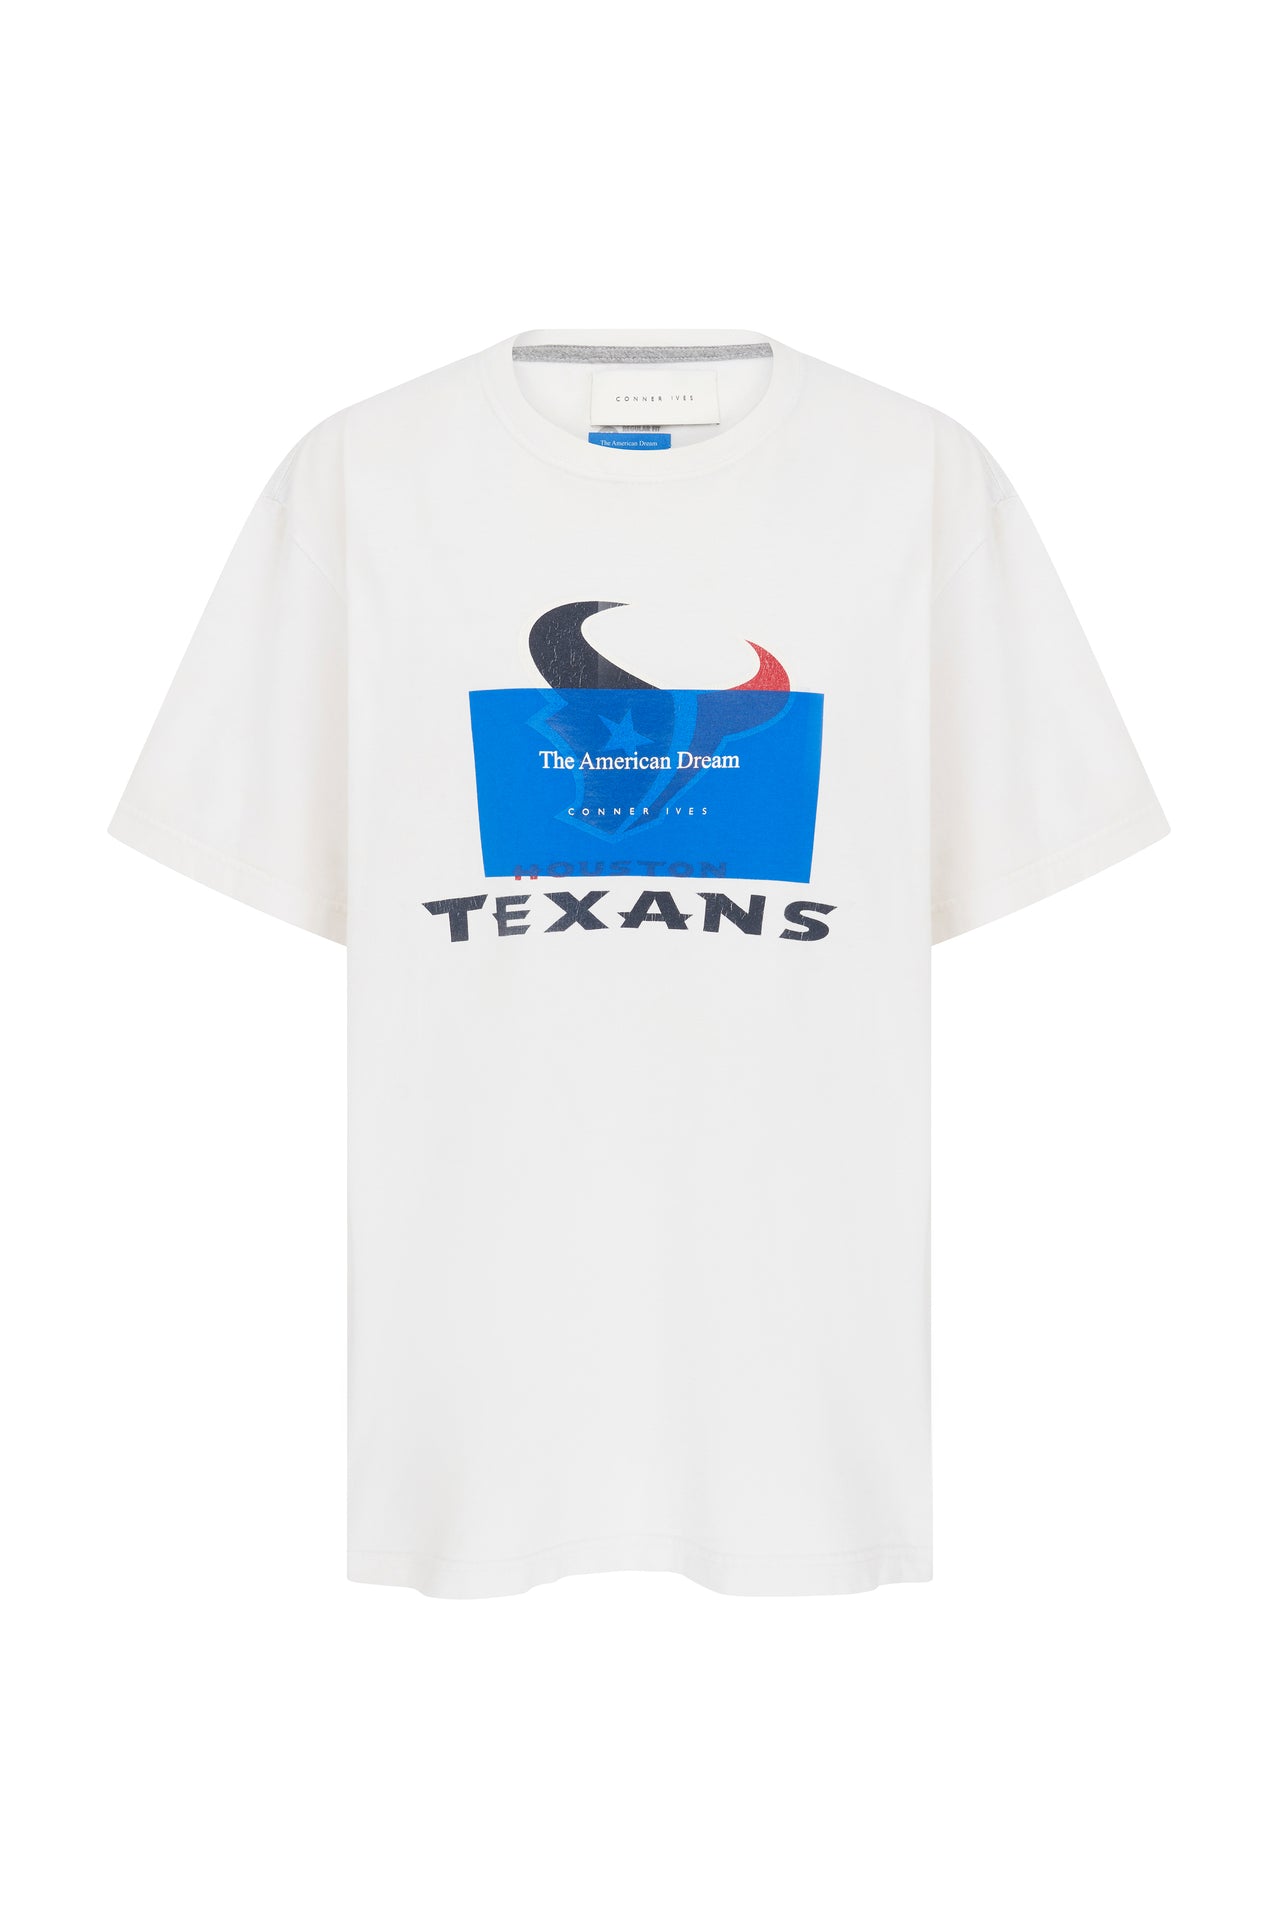 The American Dream Reprint T-shirt- Large